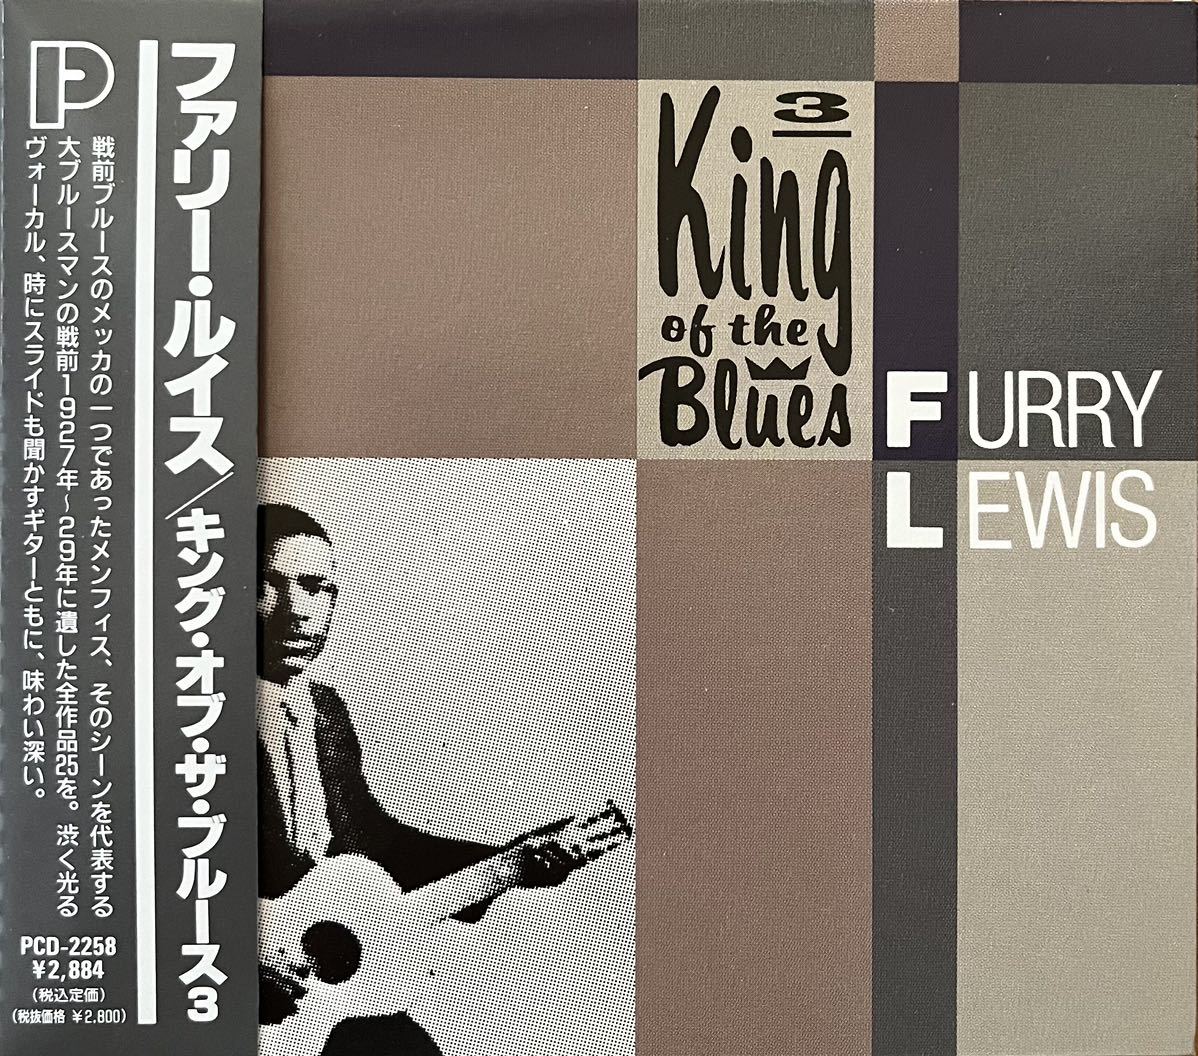 CD美品 国内盤★Furry Lewis / King Of The Blues 3★ファリー・ルイス / キング・オブ・ザ・ブルース3★PCD-2258 解説・歌詞・帯付の画像1